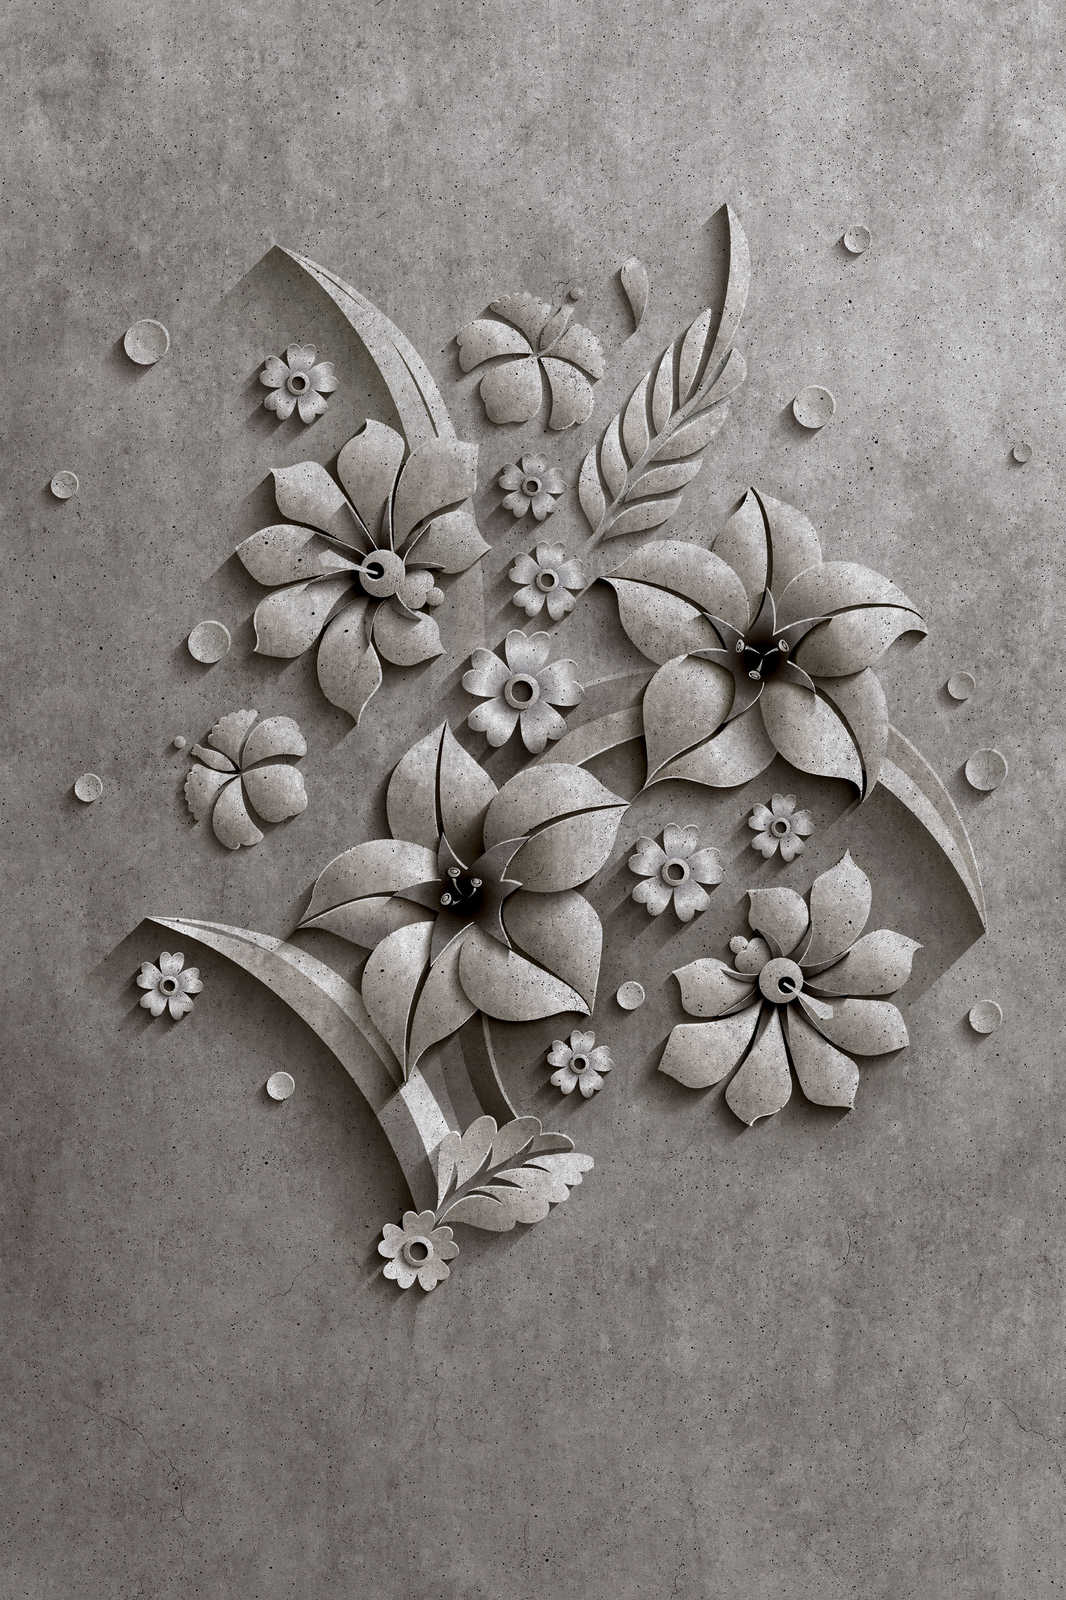             Relieve 1 - Pintura sobre lienzo en estructura de hormigón de un relieve floral - 0,90 m x 0,60 m
        